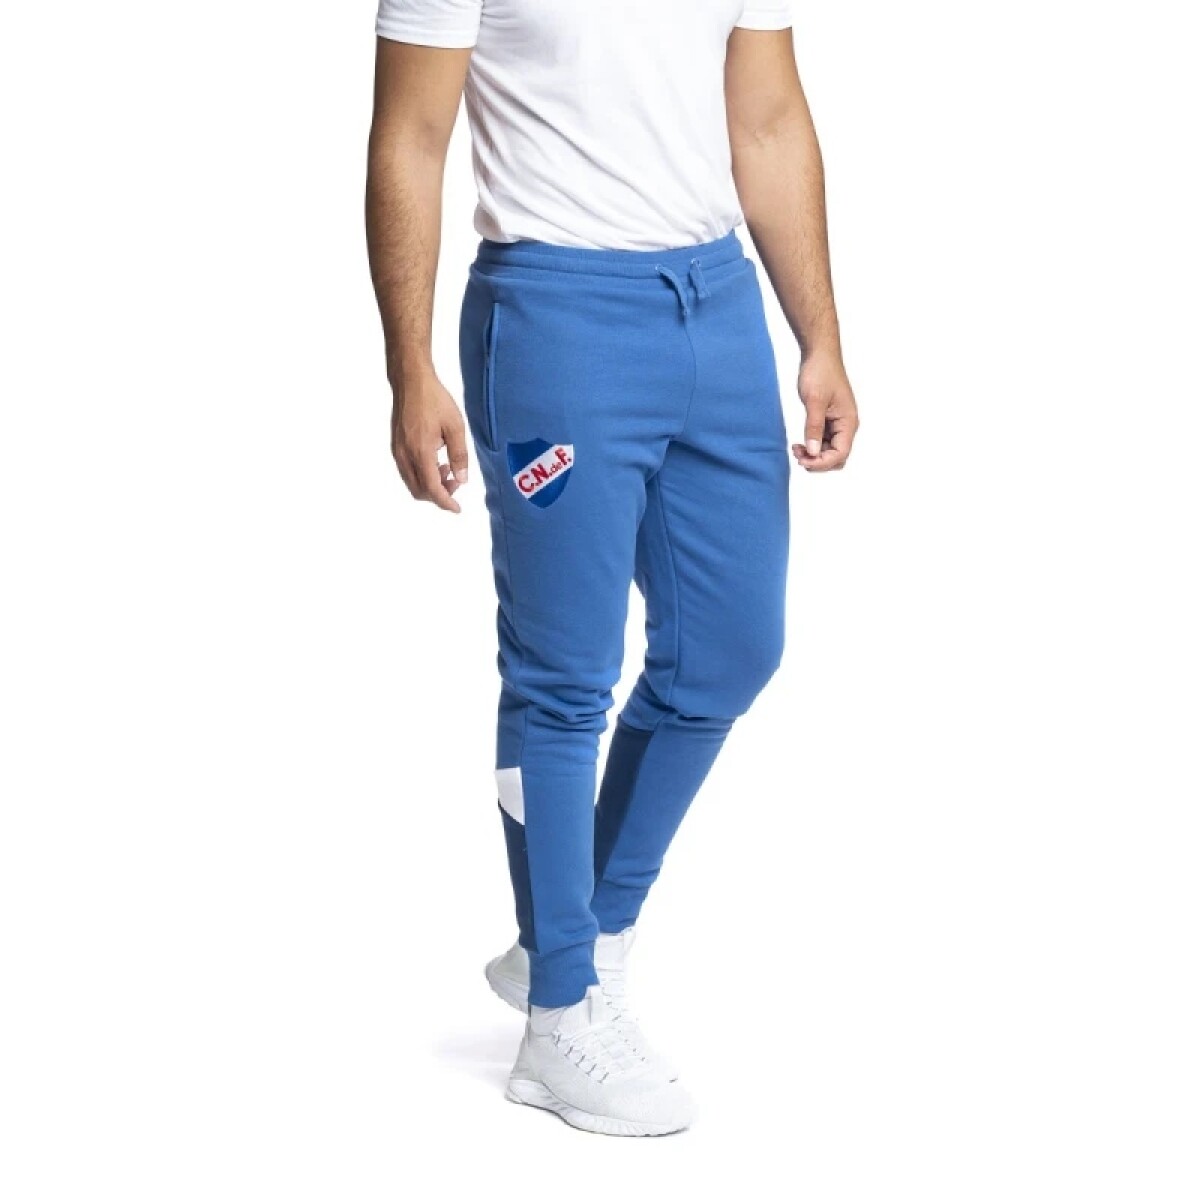 Pantalon Umbro Nacional Futbol Hombre - Color Único 